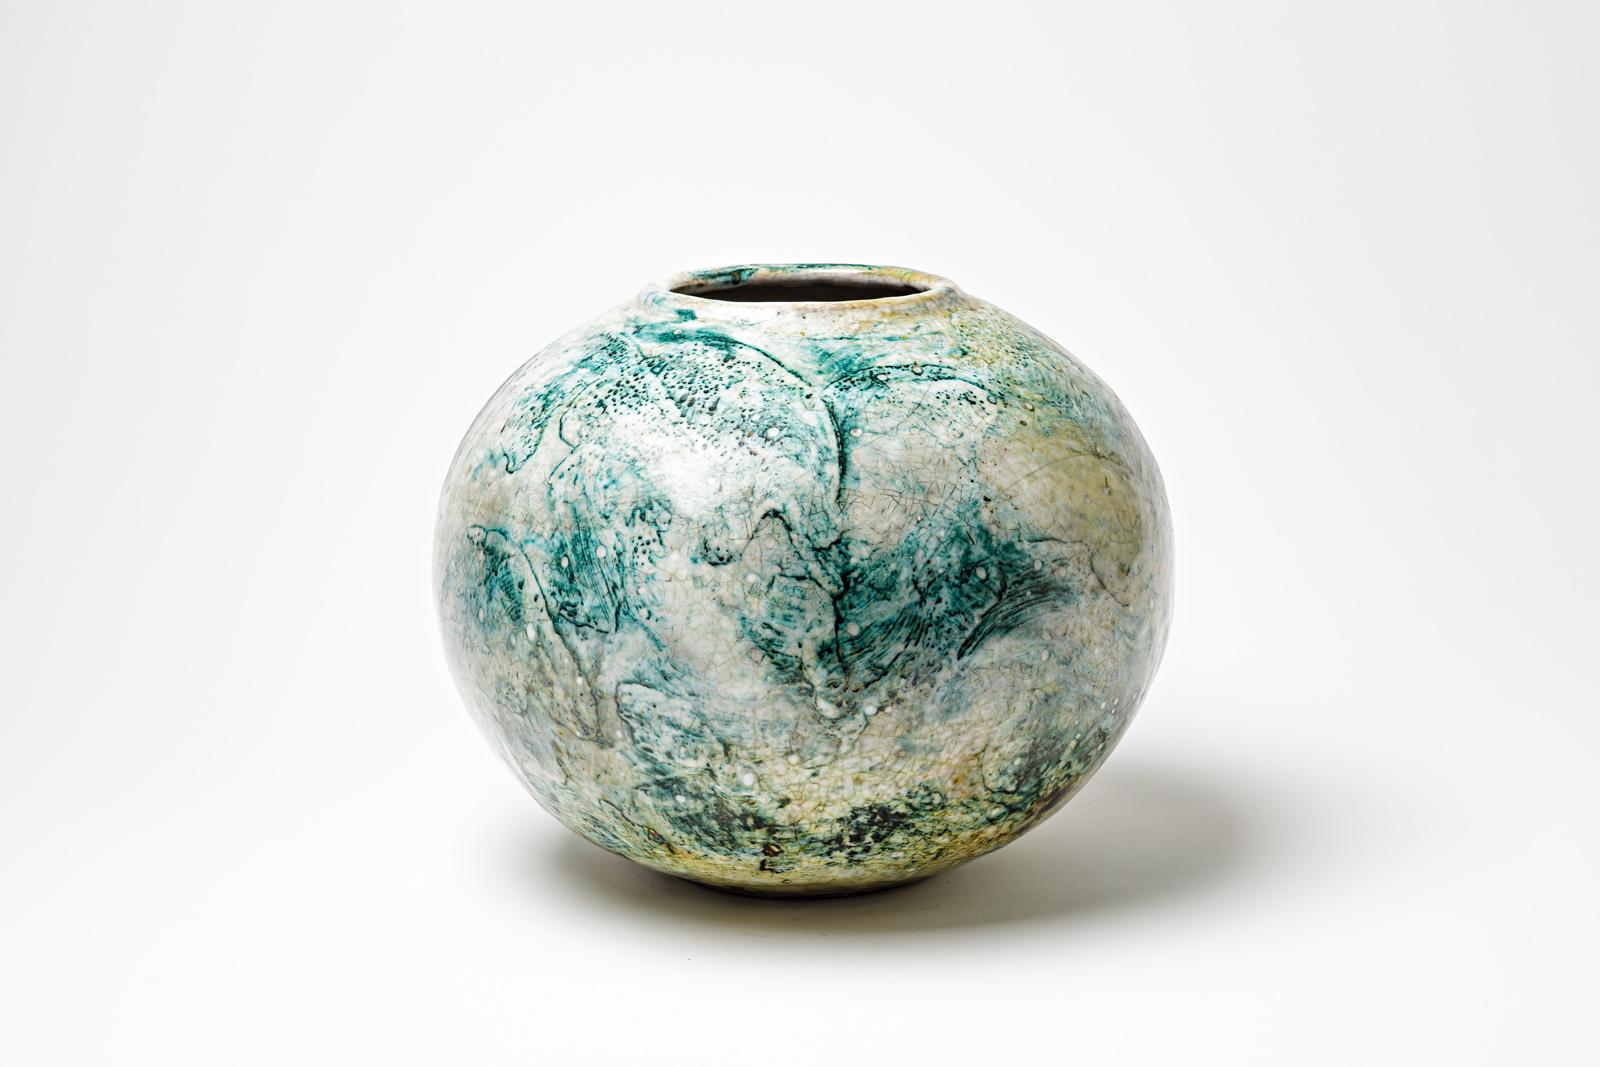 Green/blue and white glazed ceramic vase by Gisèle Buthod Garçon.
Raku fired. Artist monogram and signature under the base. Circa 1980-1990. 
H : 10.2’ x 11.8’ inches.